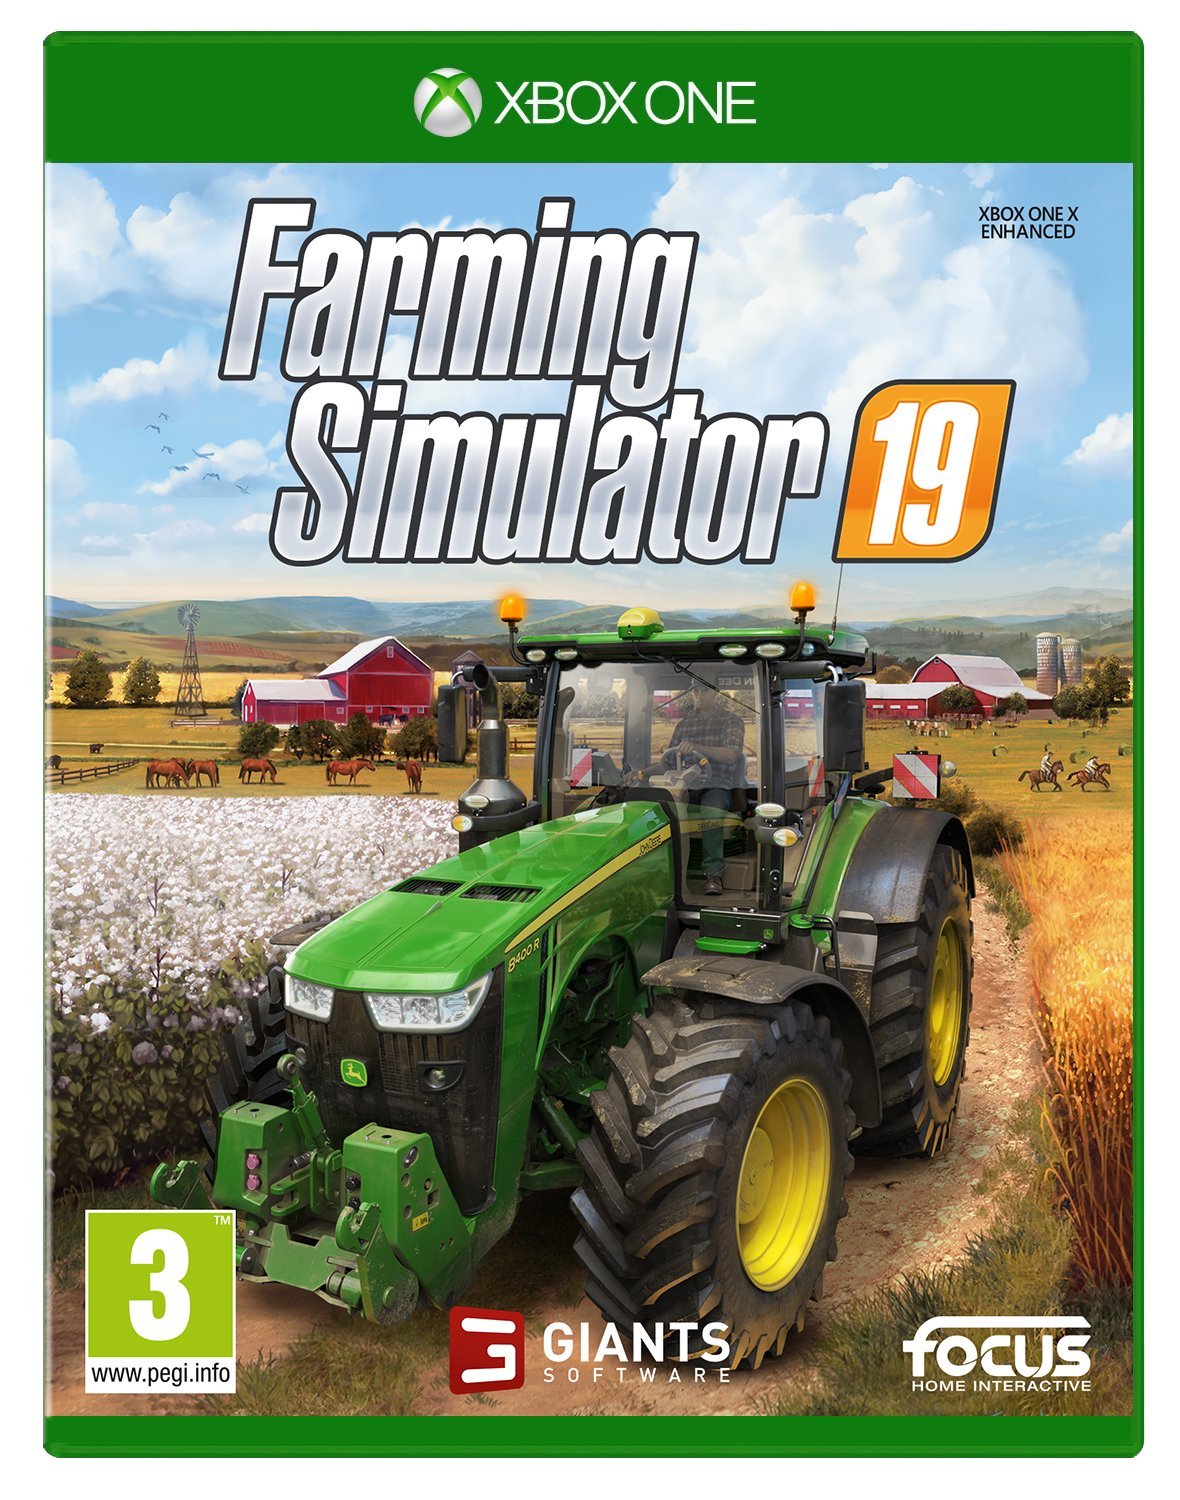 buy-farming-simulator-19-digital-download-key-xbox-one-with-bitcoin-ethereum-litecoin